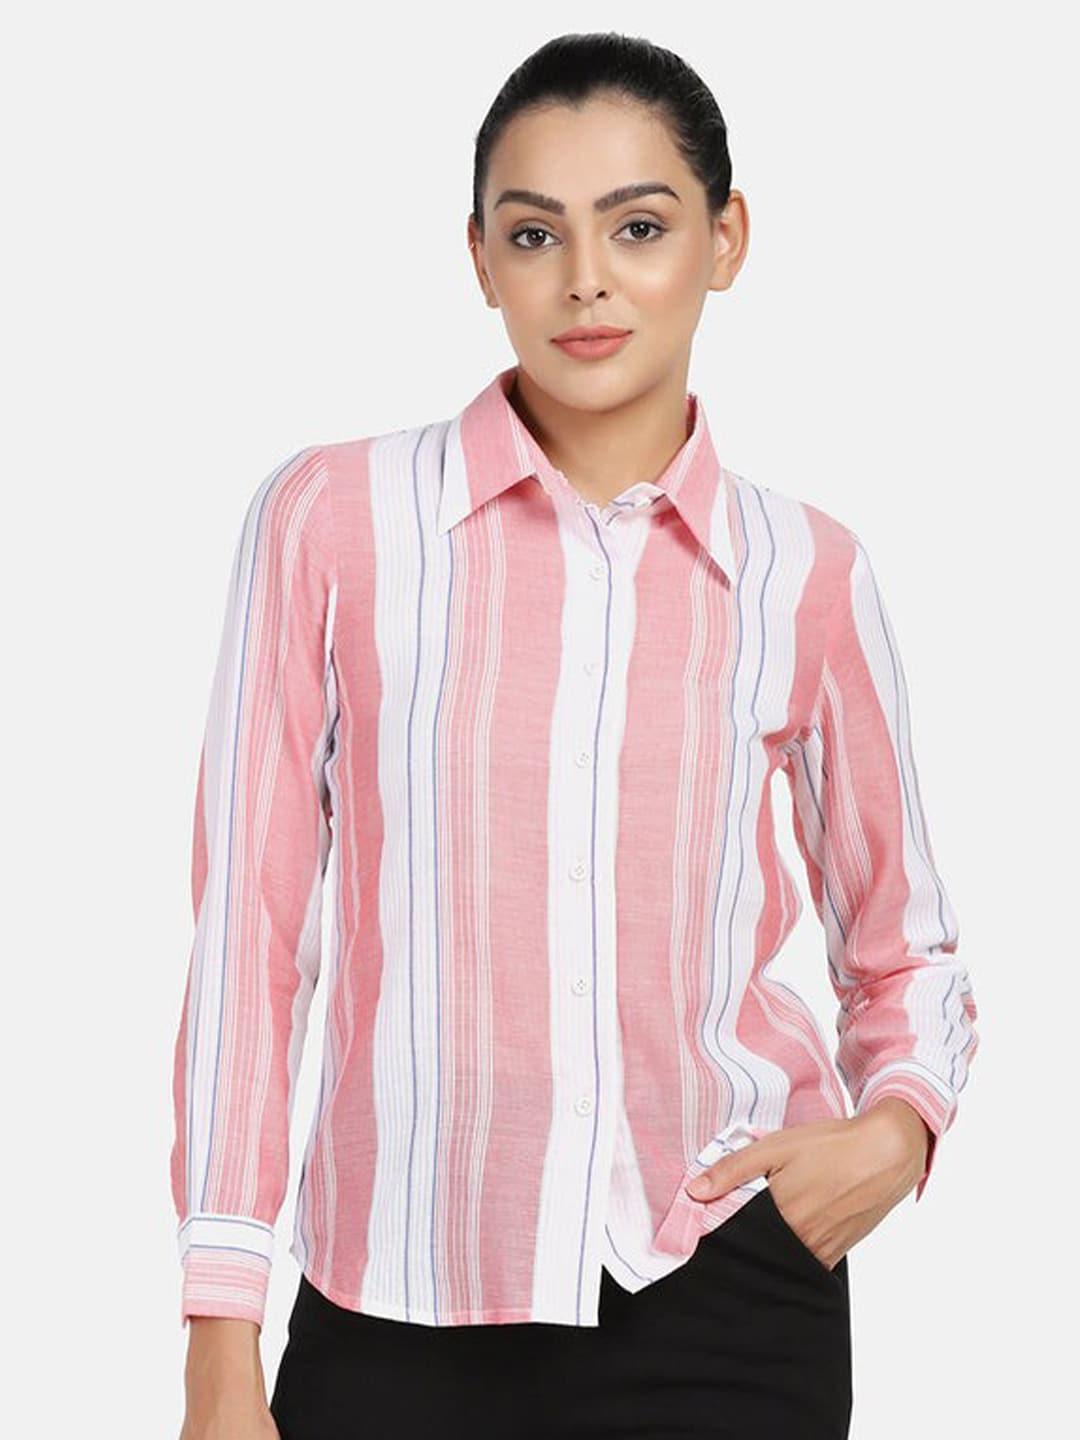 powersutra-women-comfort-striped-casual-shirt